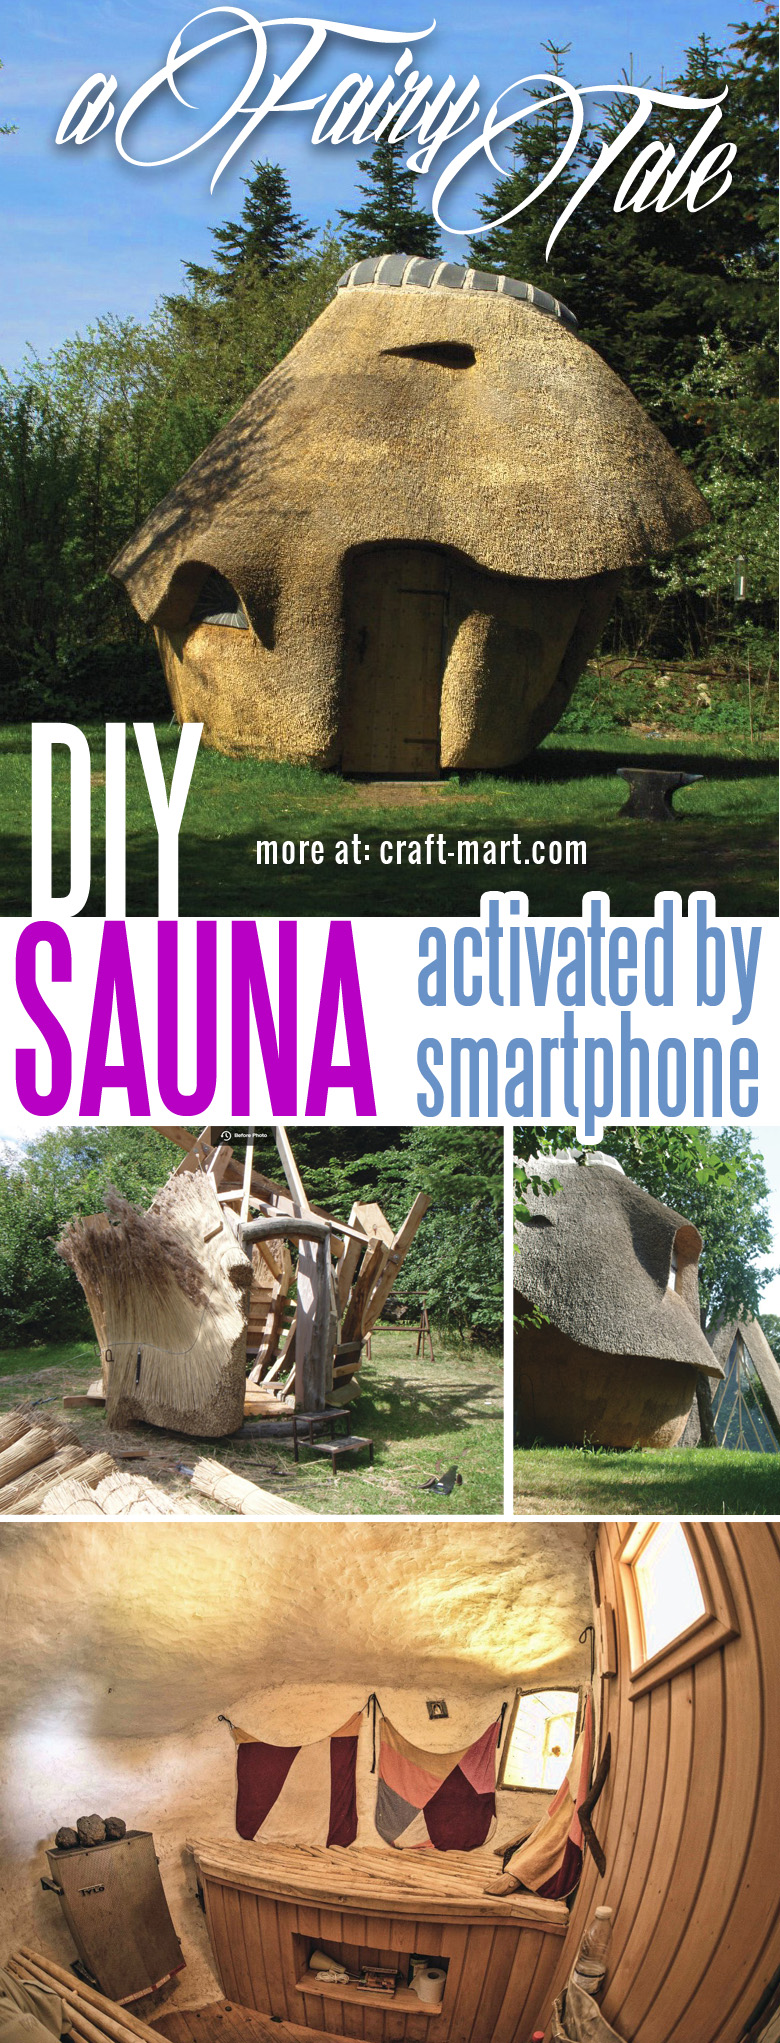 Incredible Storybook DIY Sauna Activated By Smartphone Craft Mart